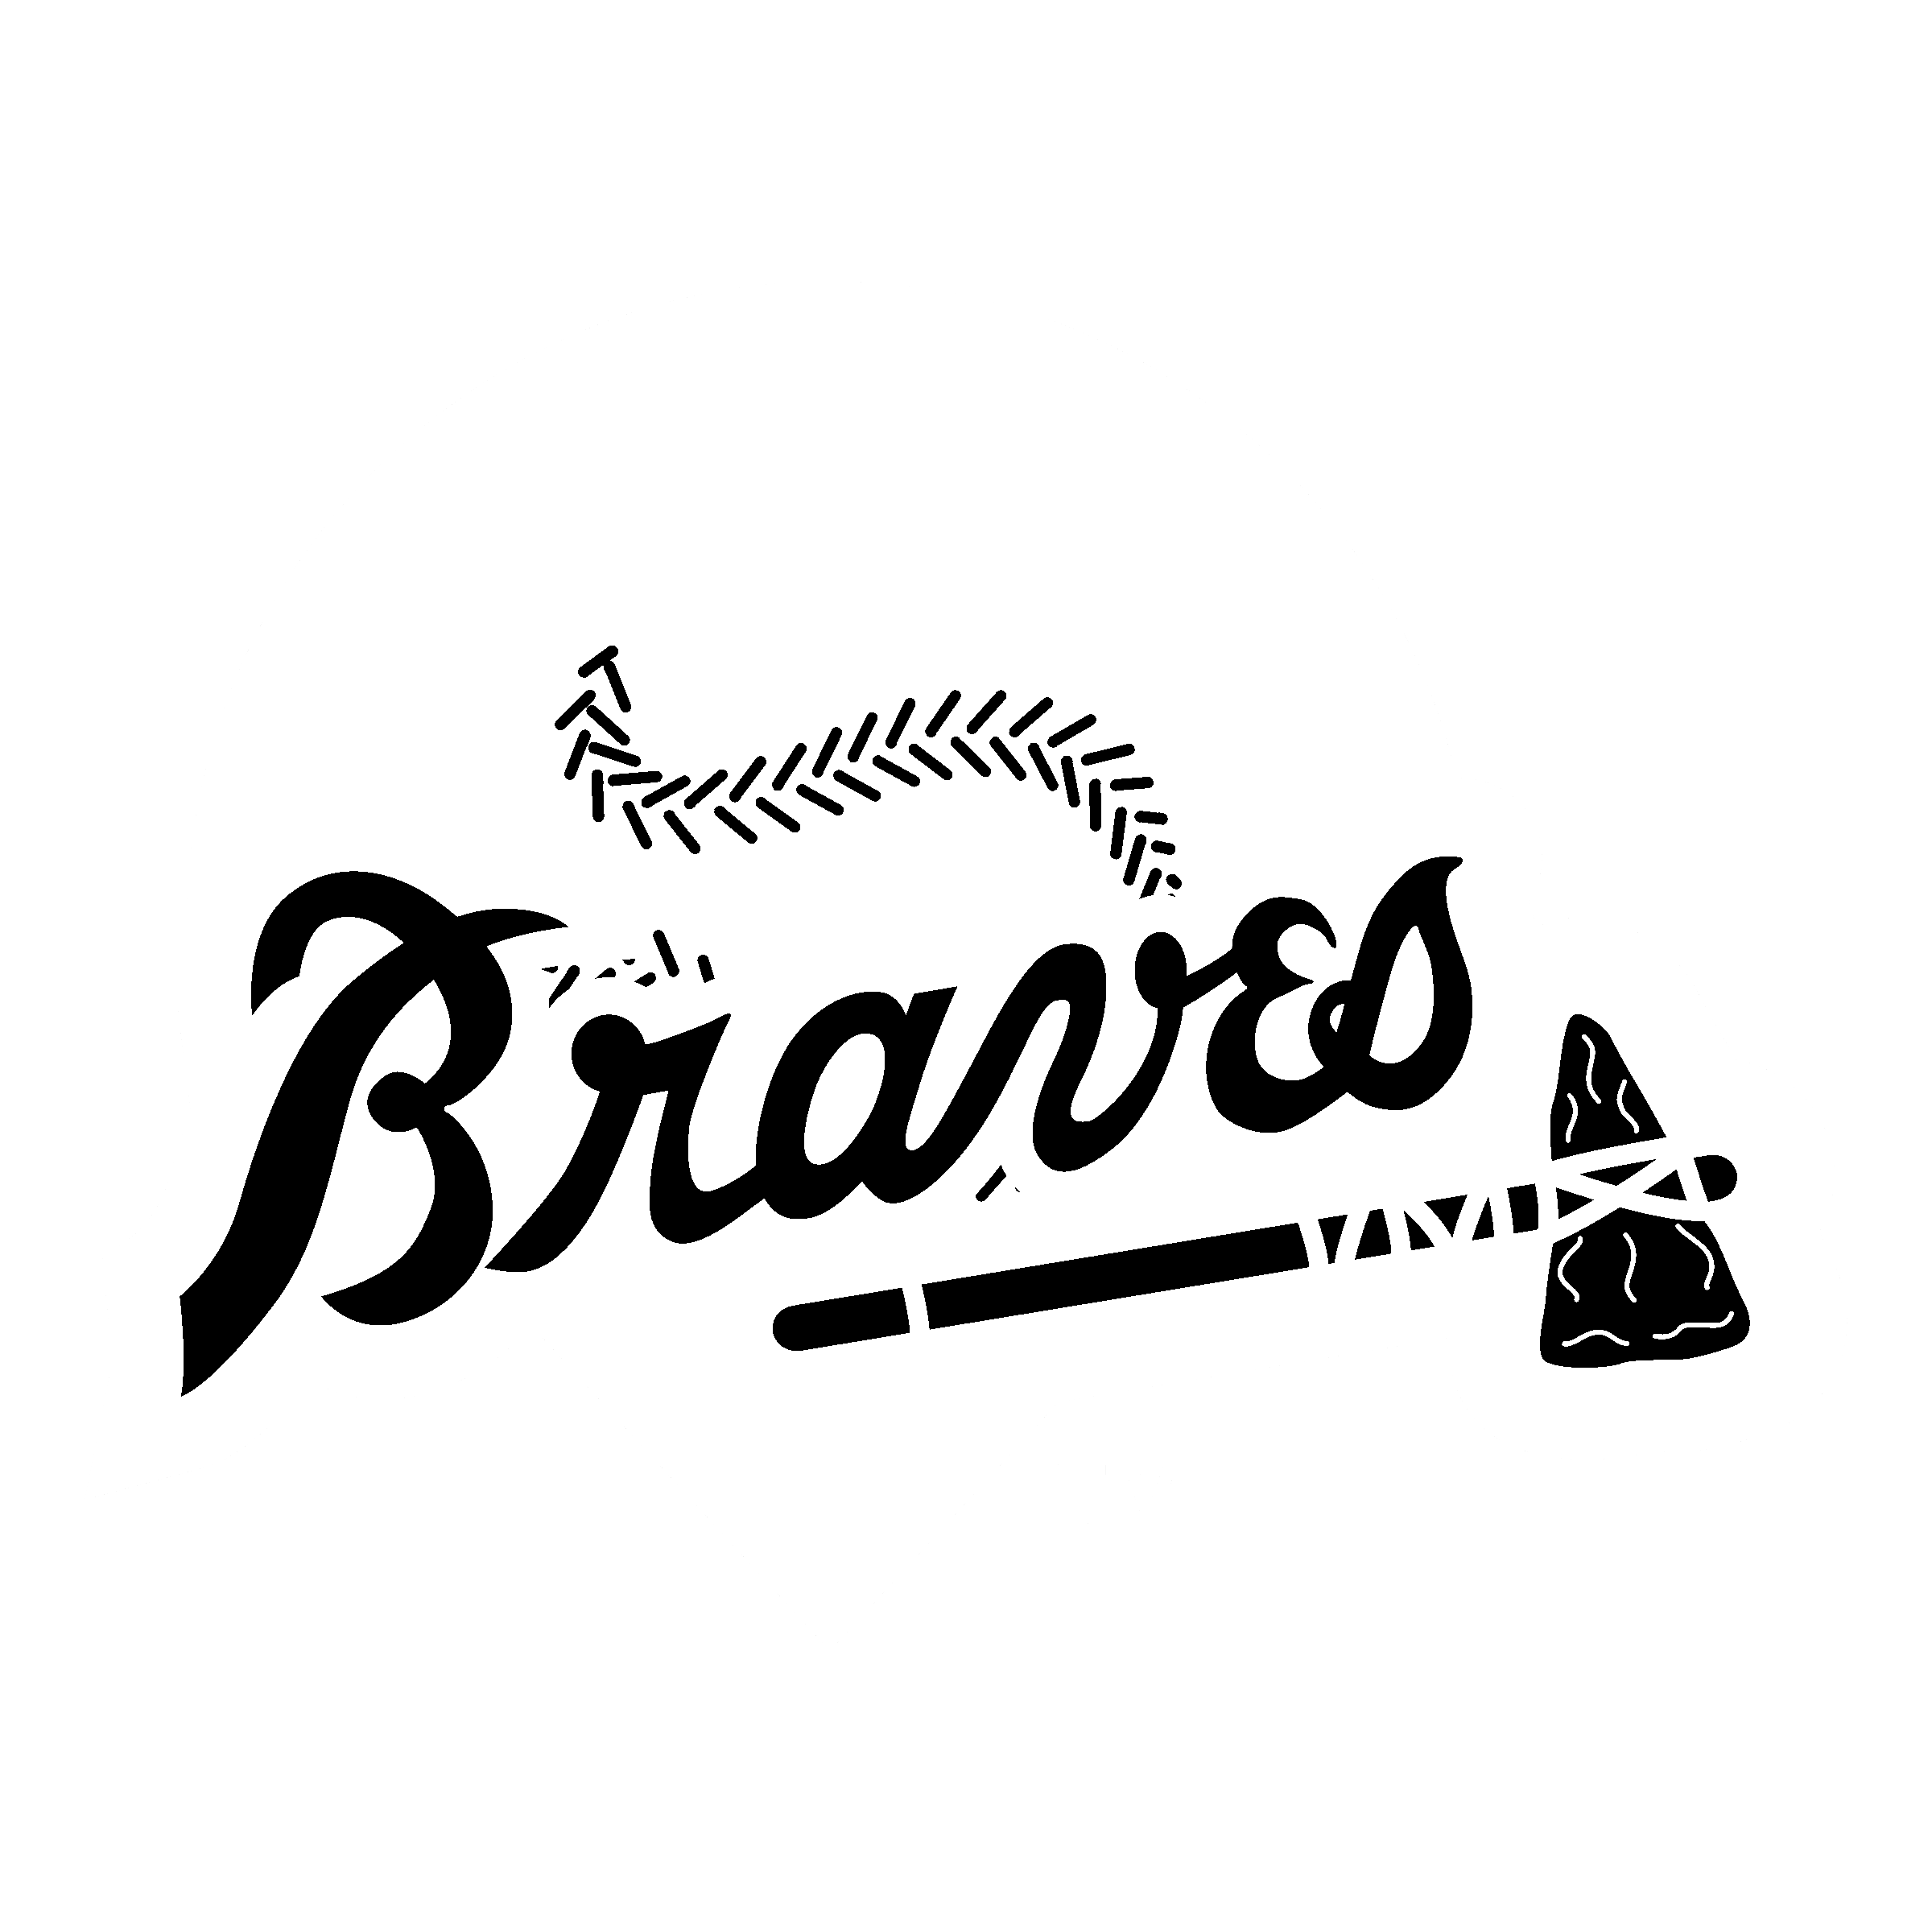 Braves Logo PNG Clipart